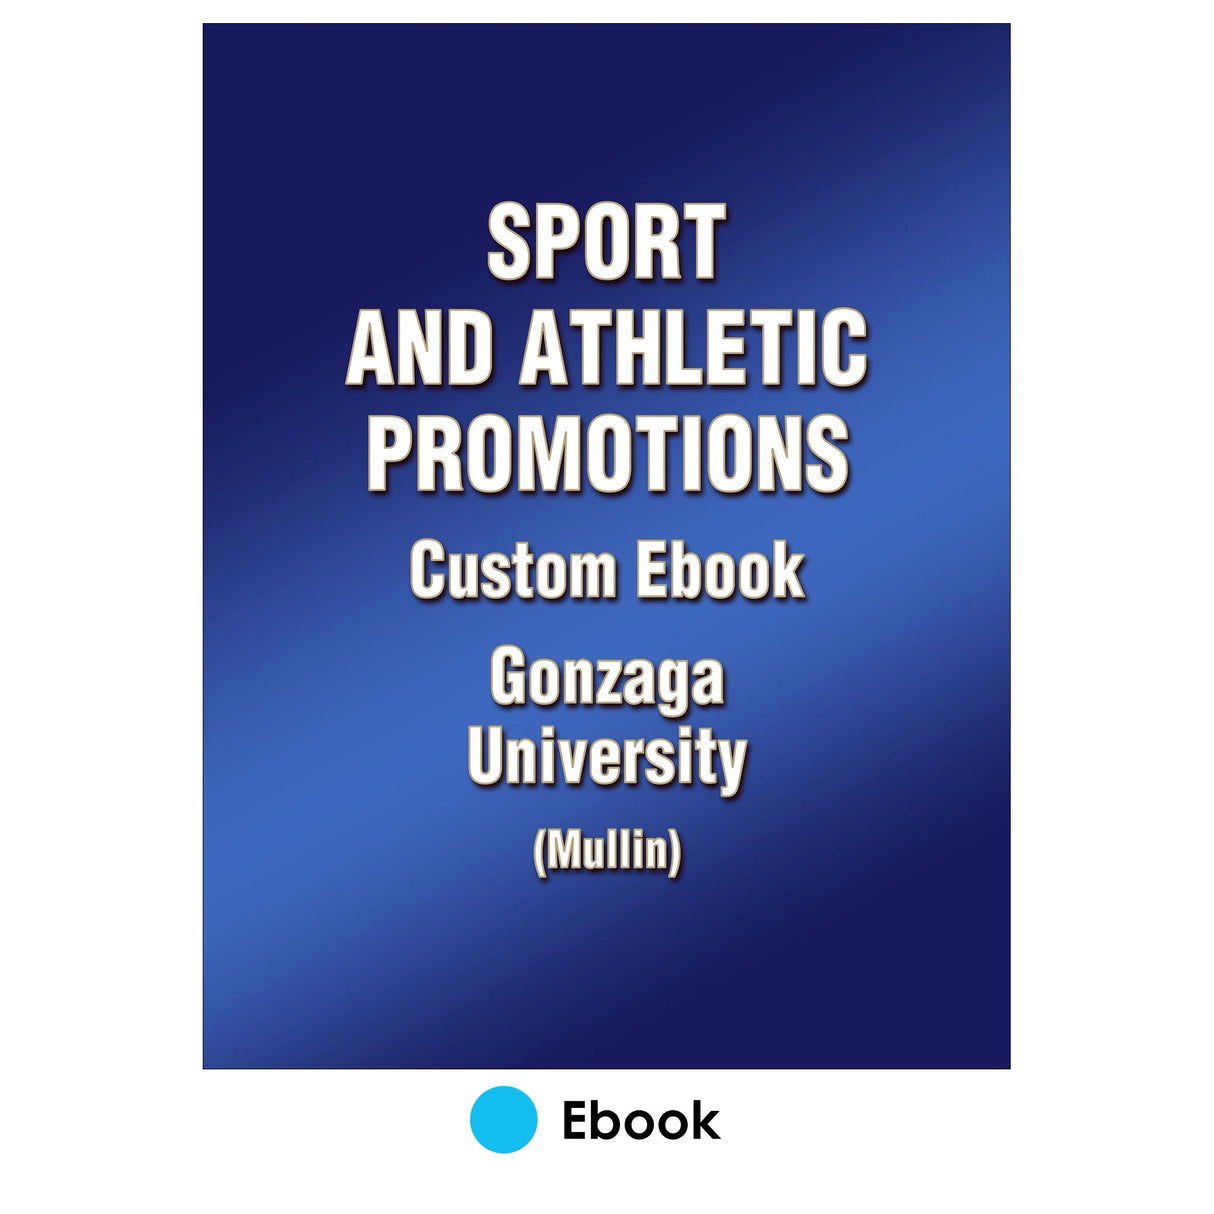 Sport and Athletic Promotions Custom Ebook: Gonzaga University (Mullin)